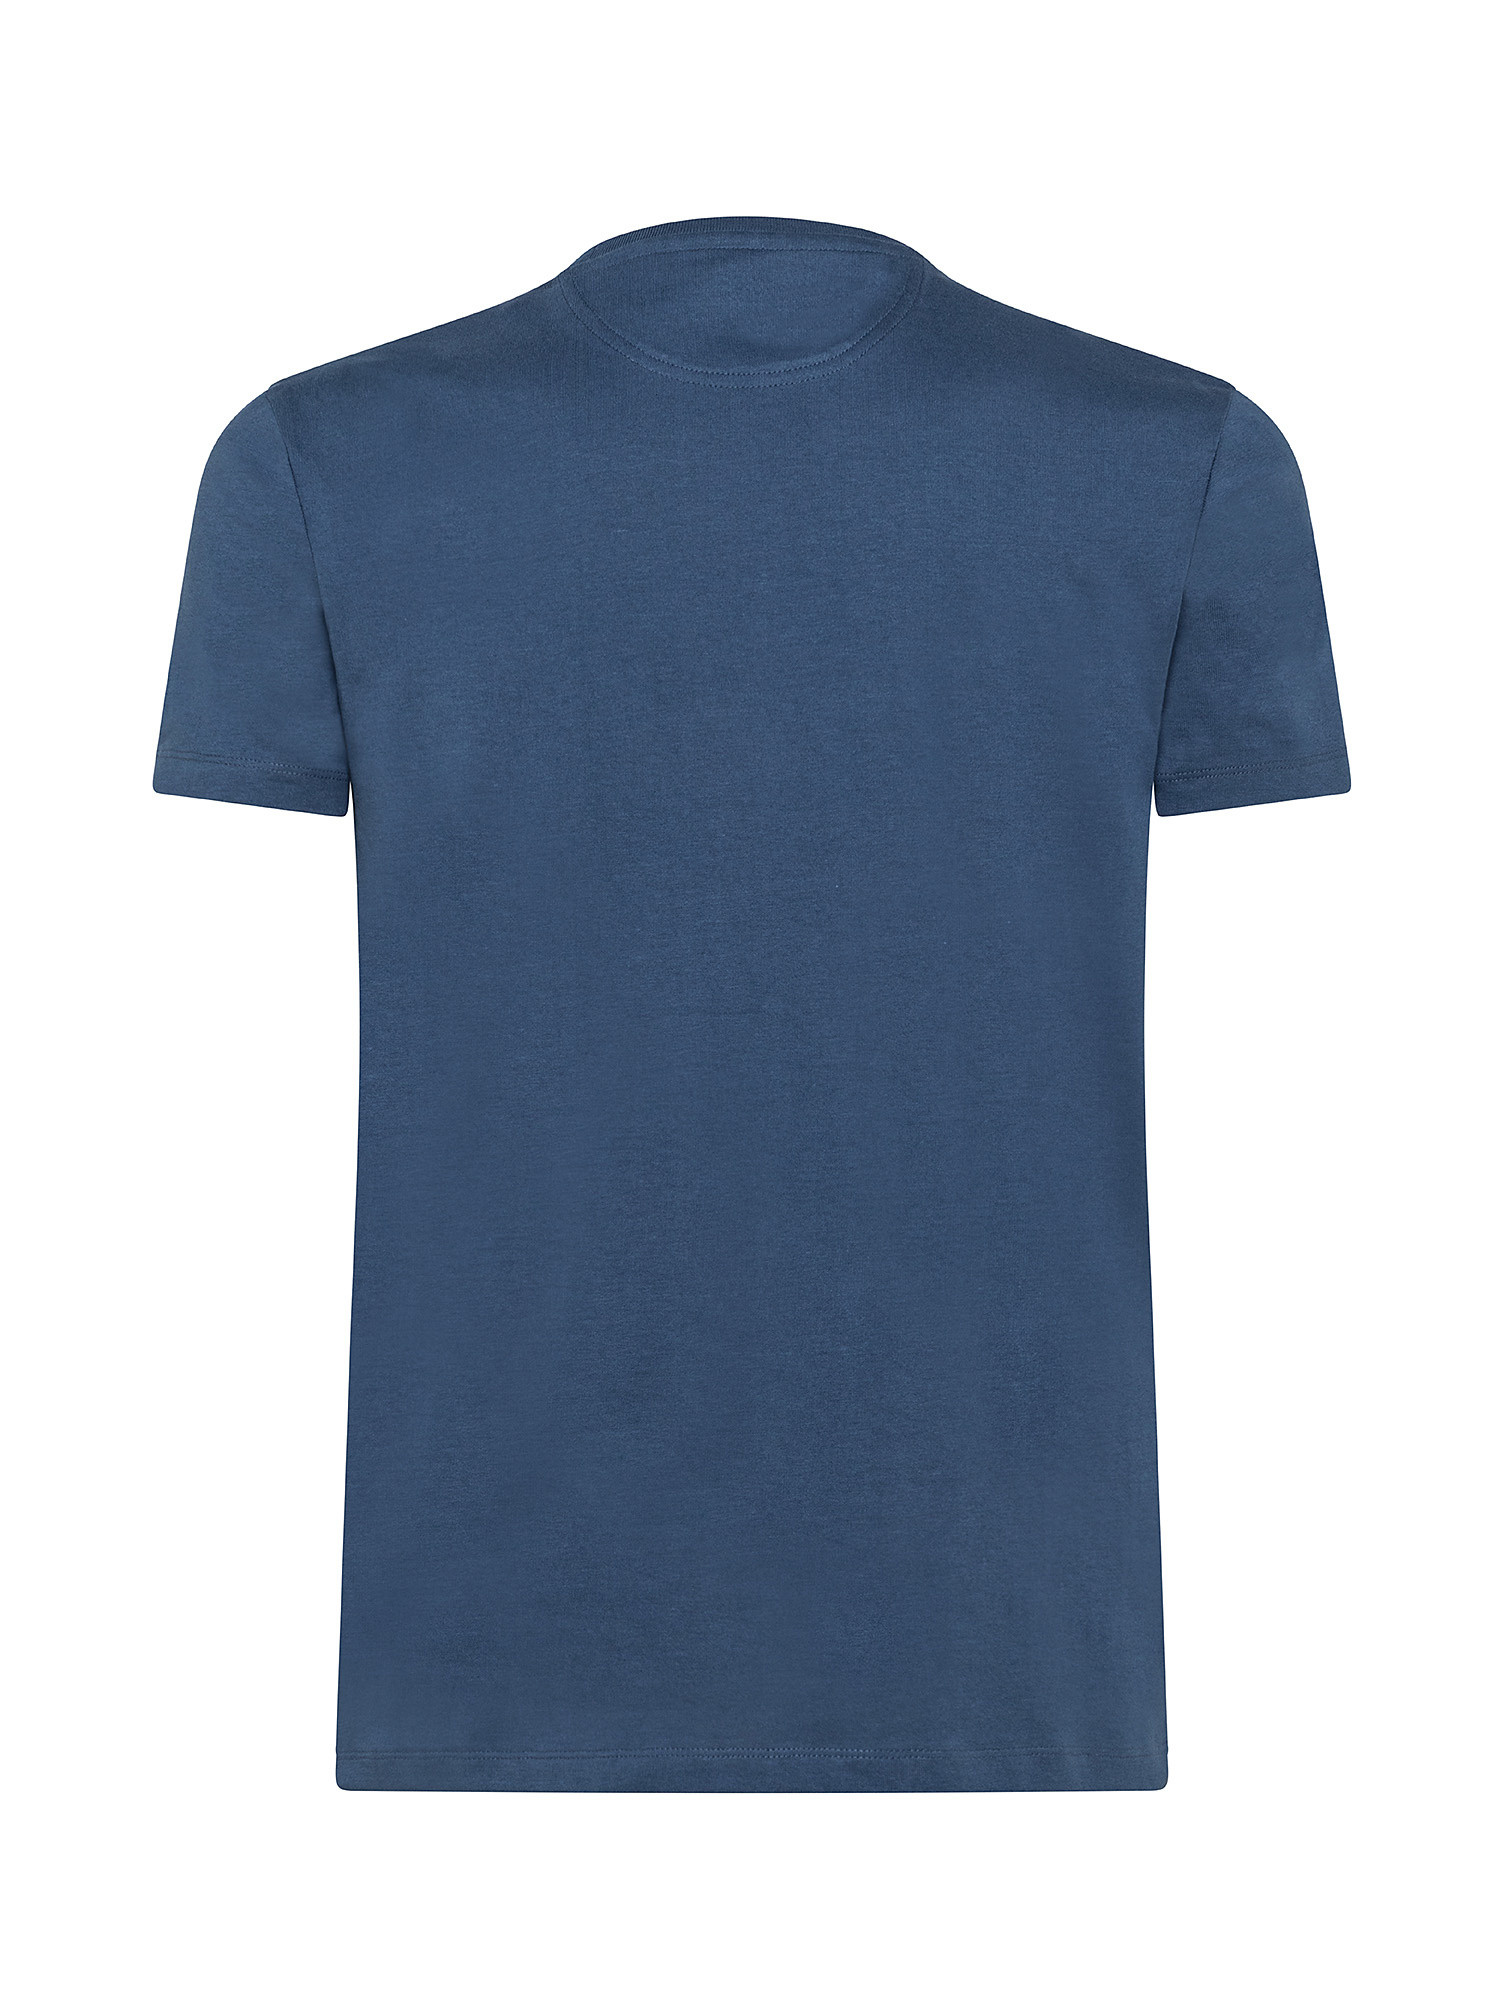 T-shirt da Uomo Dunstan River, Blu, large image number 1